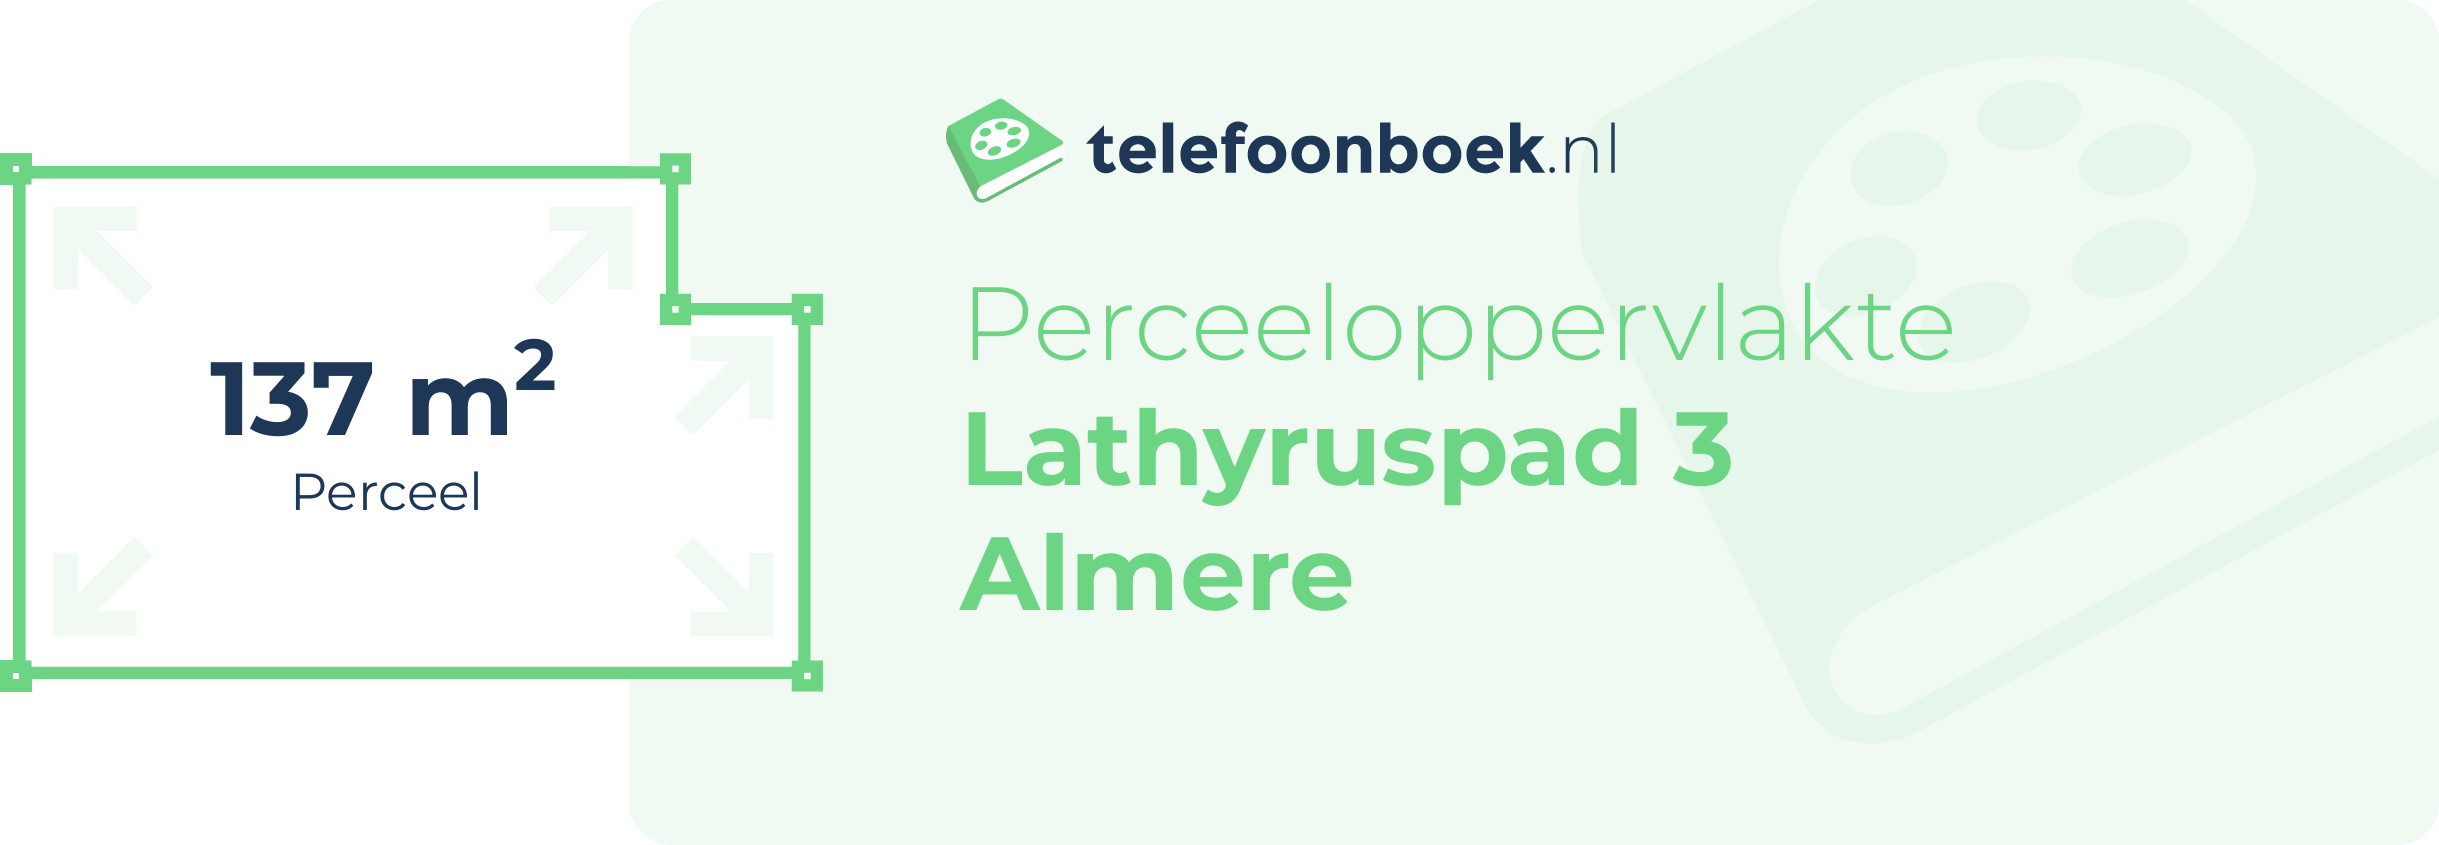 Perceeloppervlakte Lathyruspad 3 Almere